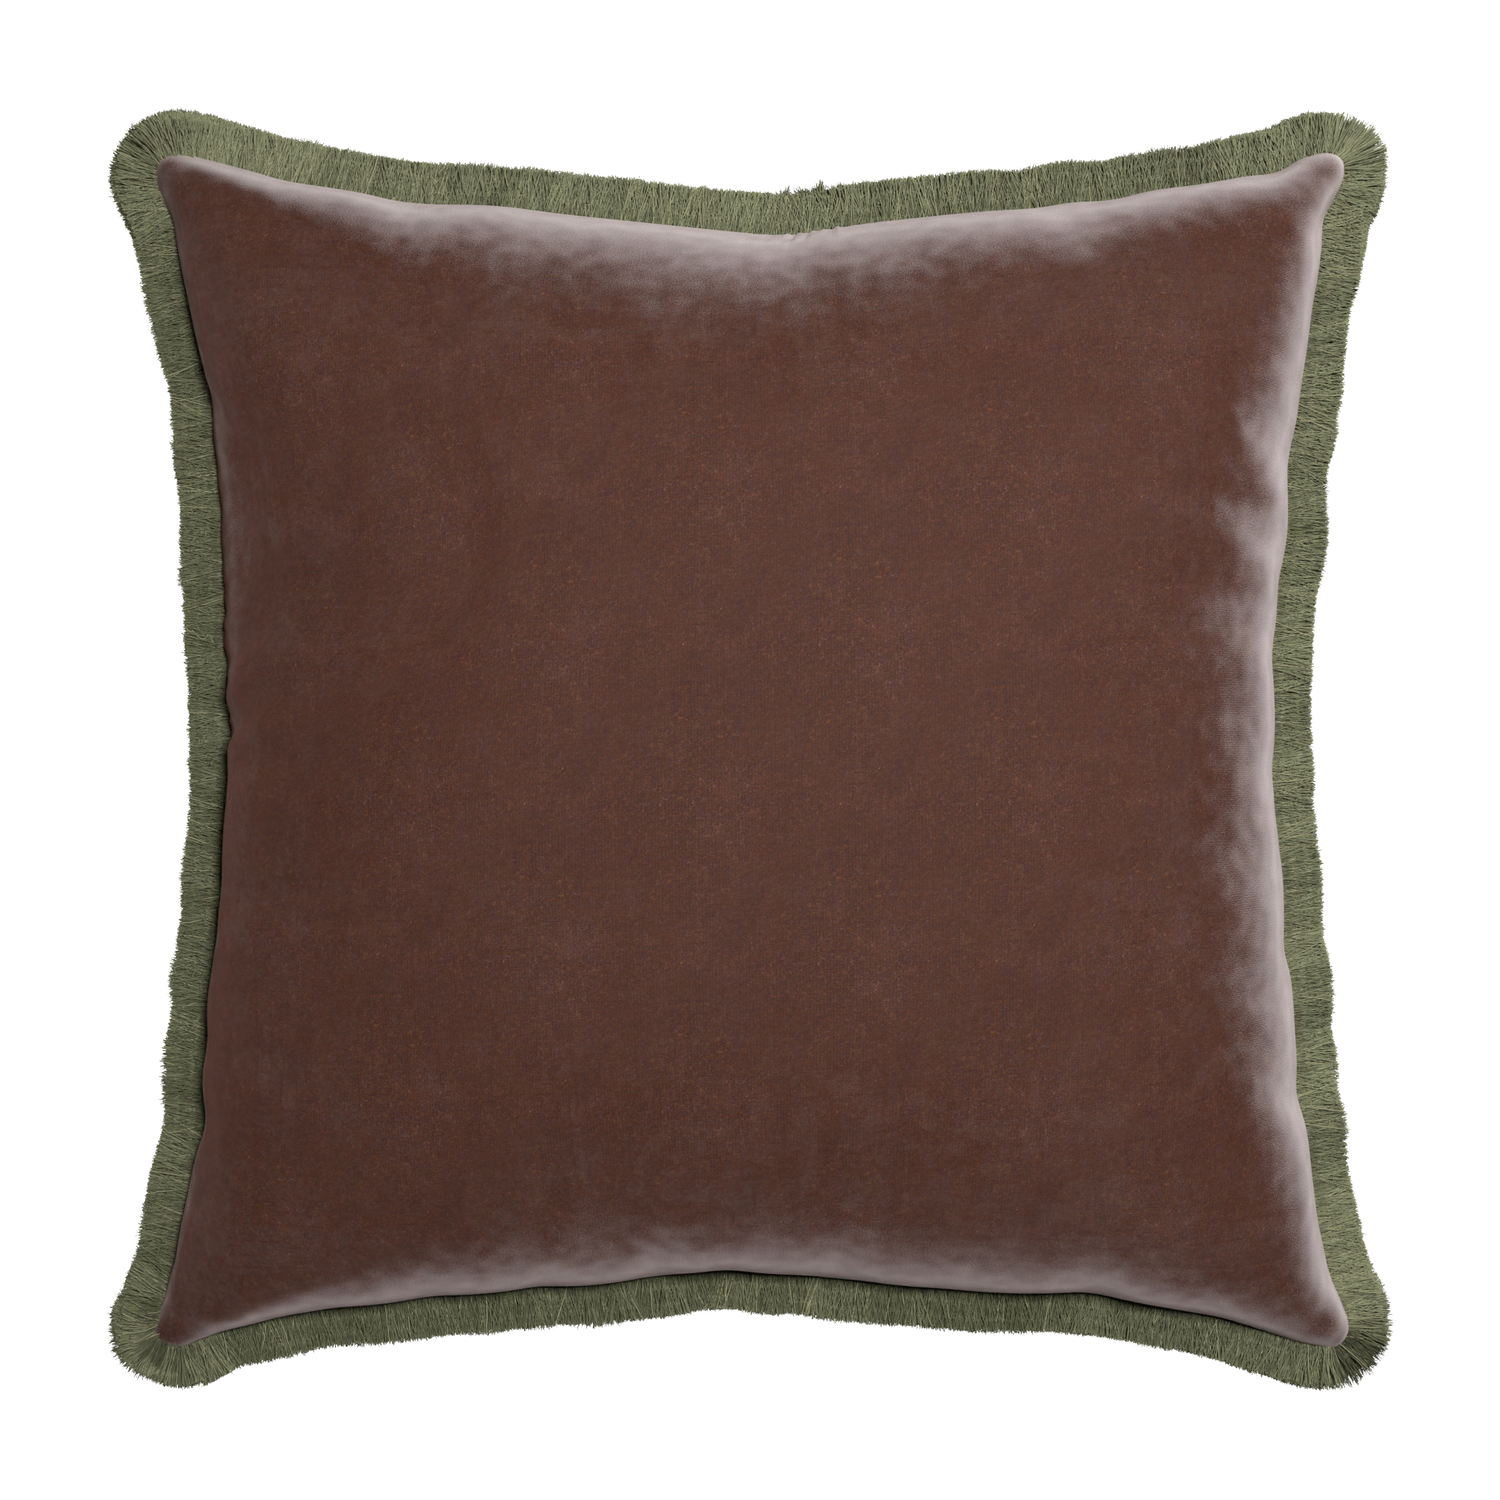 Euro-sham walnut velvet custom pillow with sage fringe on white background